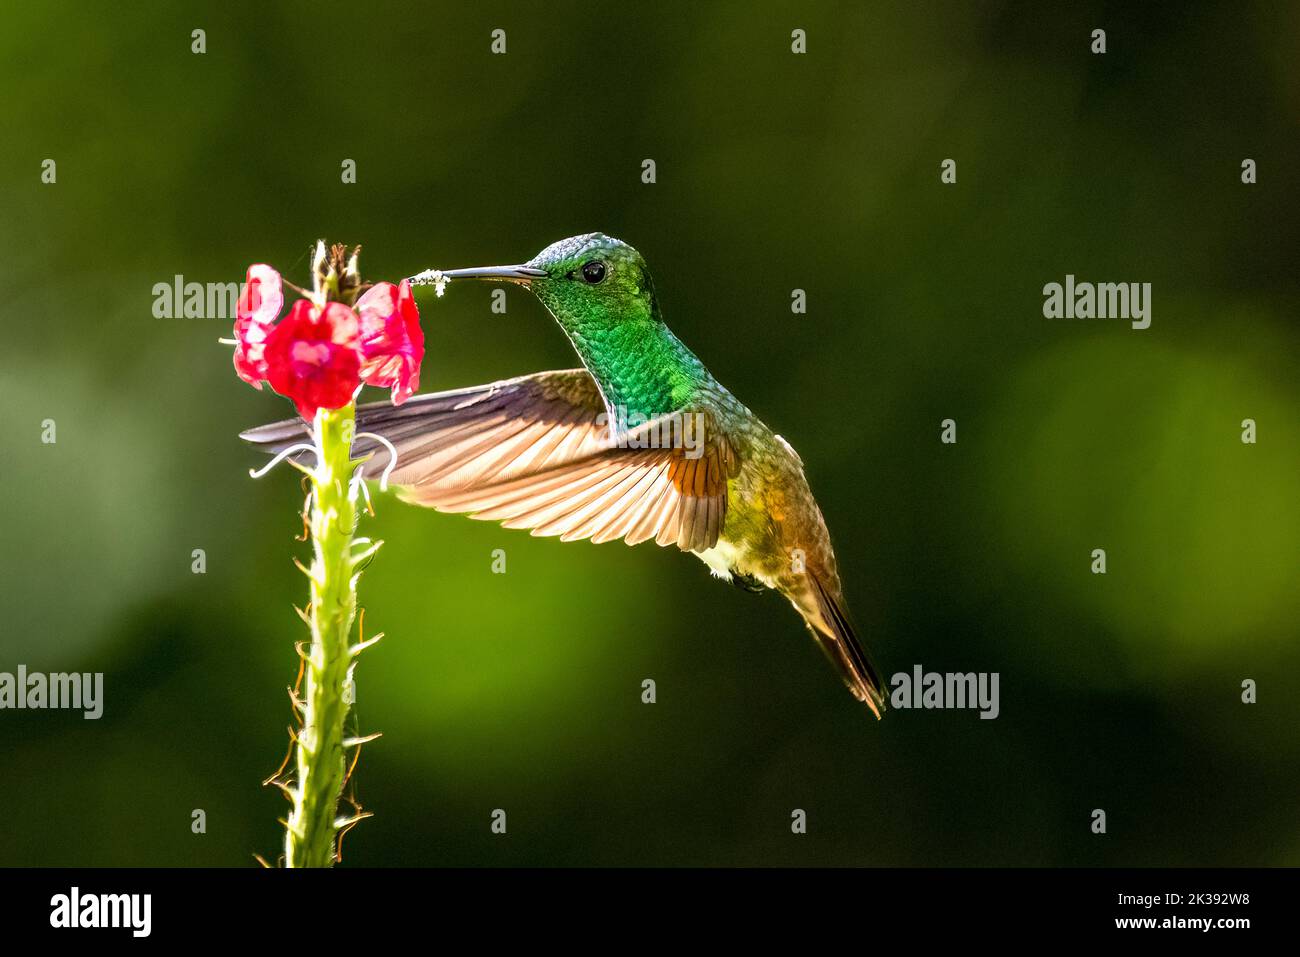 Snowy Bellied Hummingbird in flight feeding on a red flower images taken in Panama Stock Photo